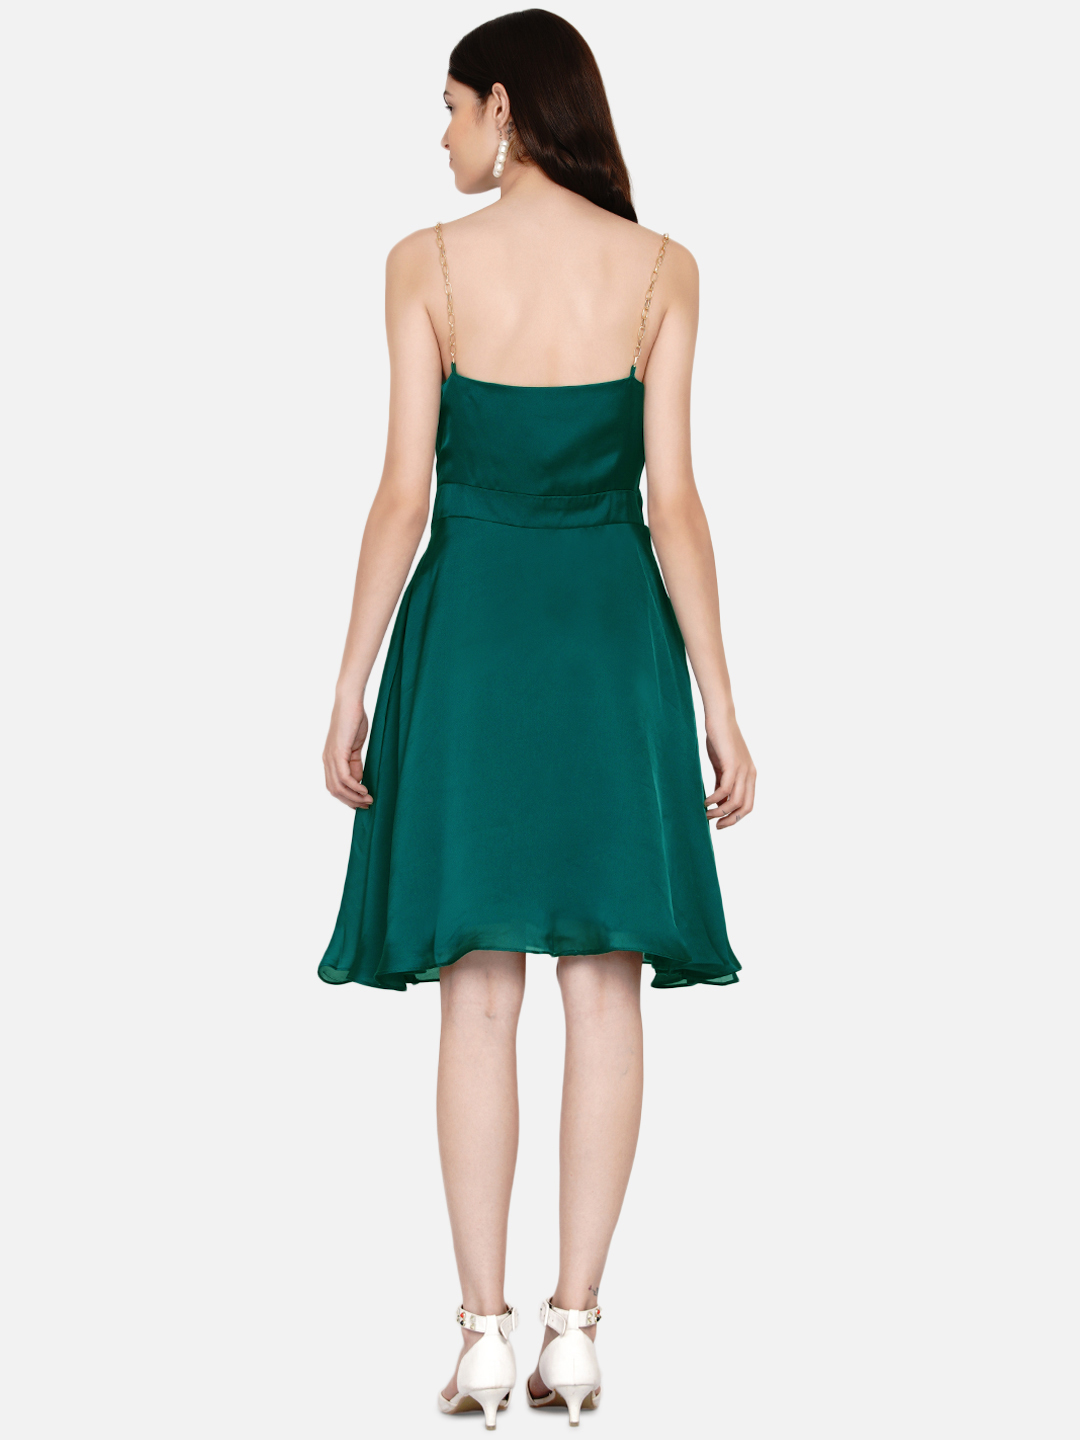 Emerald princess dress -3